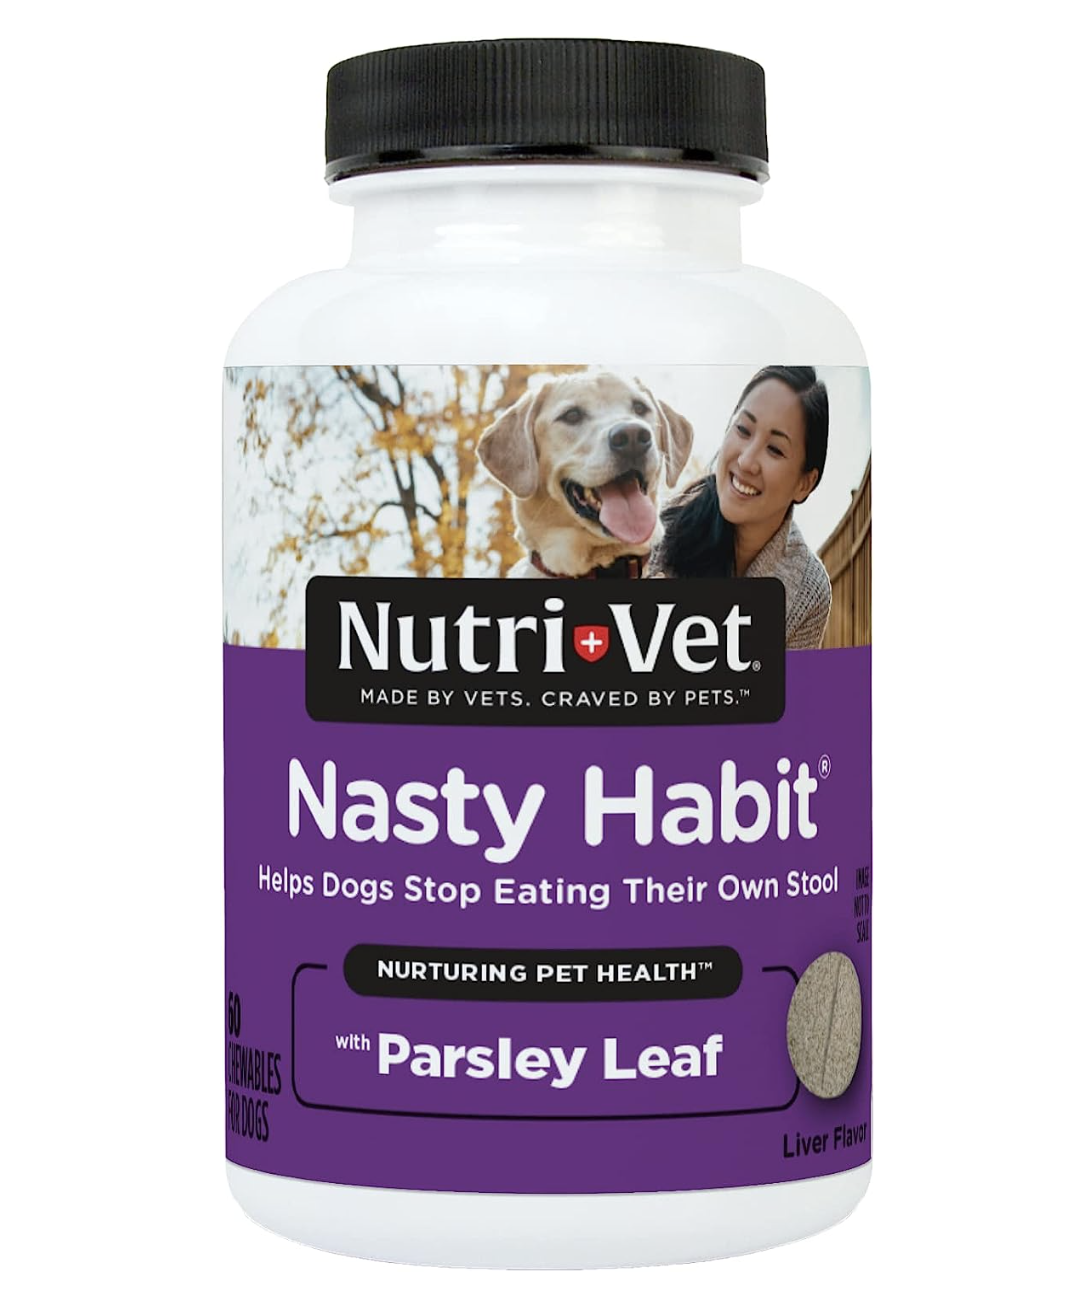 3. Nutri-Vet Nasty Habit Chewable Tablets for Dogs